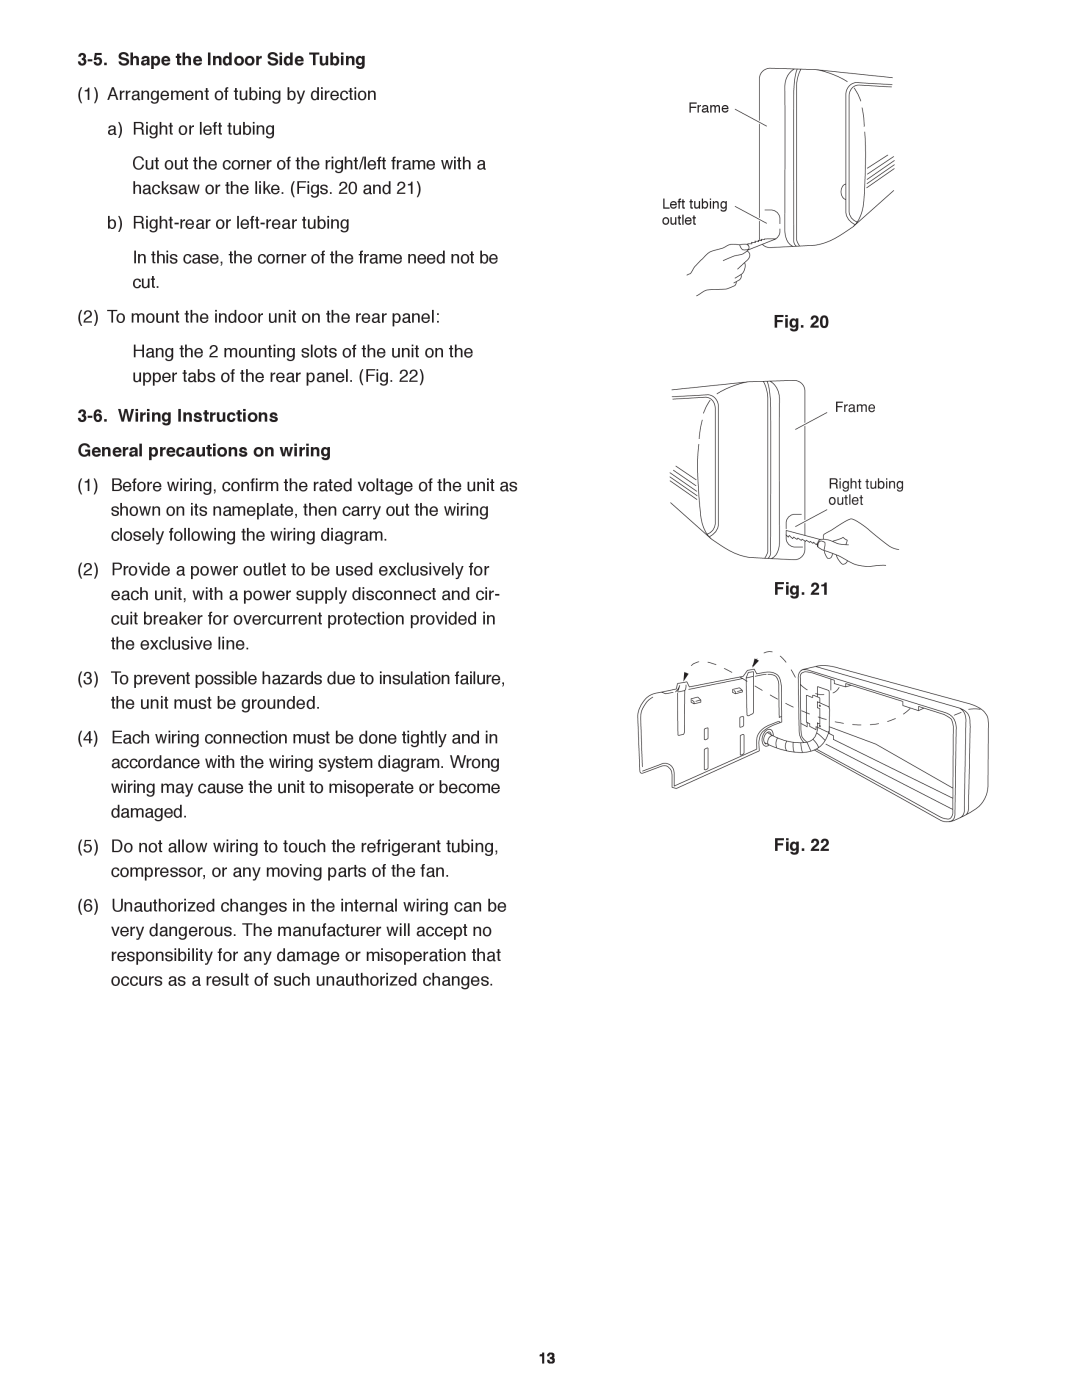 Panasonic CS-KS18NKU Shape the Indoor Side Tubing, Wiring Instructions, General precautions on wiring, Fig. Fig 